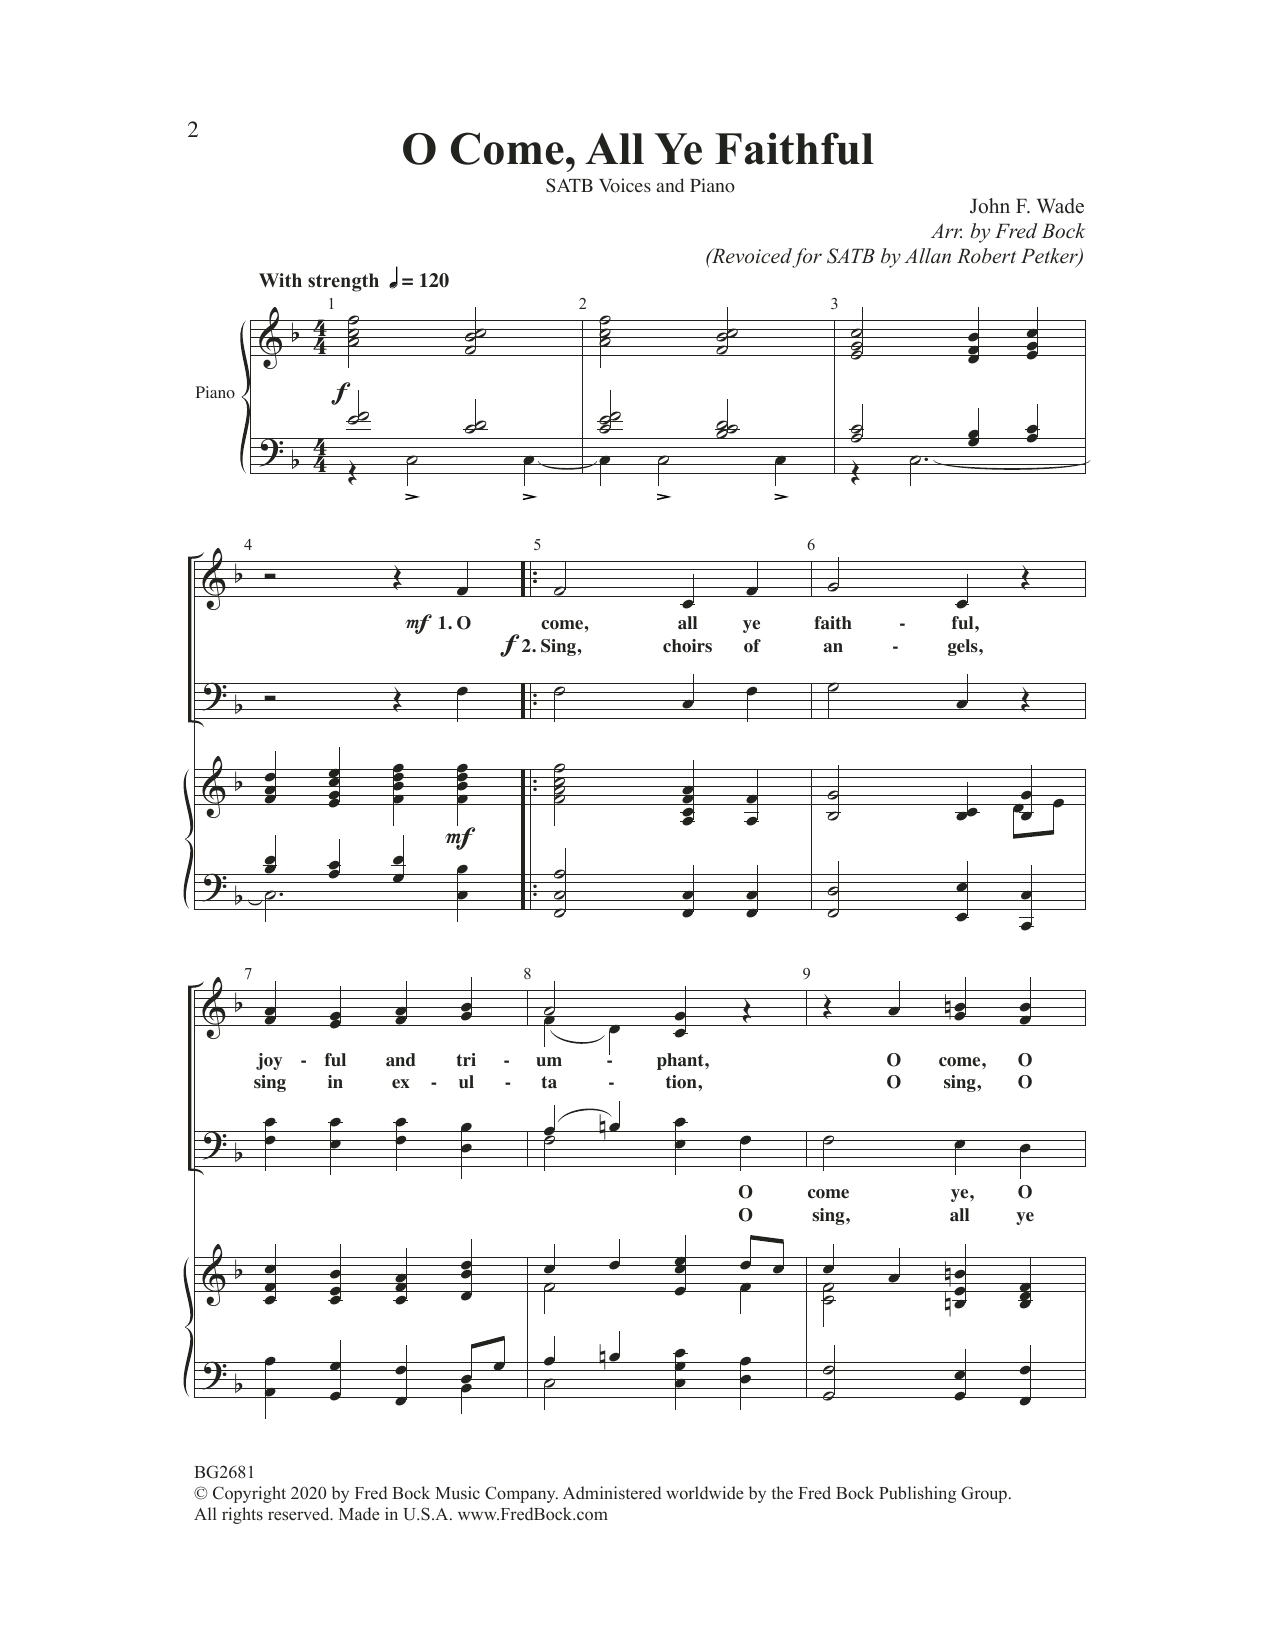 Fred Bock & Allan Robert Petker O Come All Ye Faithful Sheet Music Notes & Chords for SATB Choir - Download or Print PDF